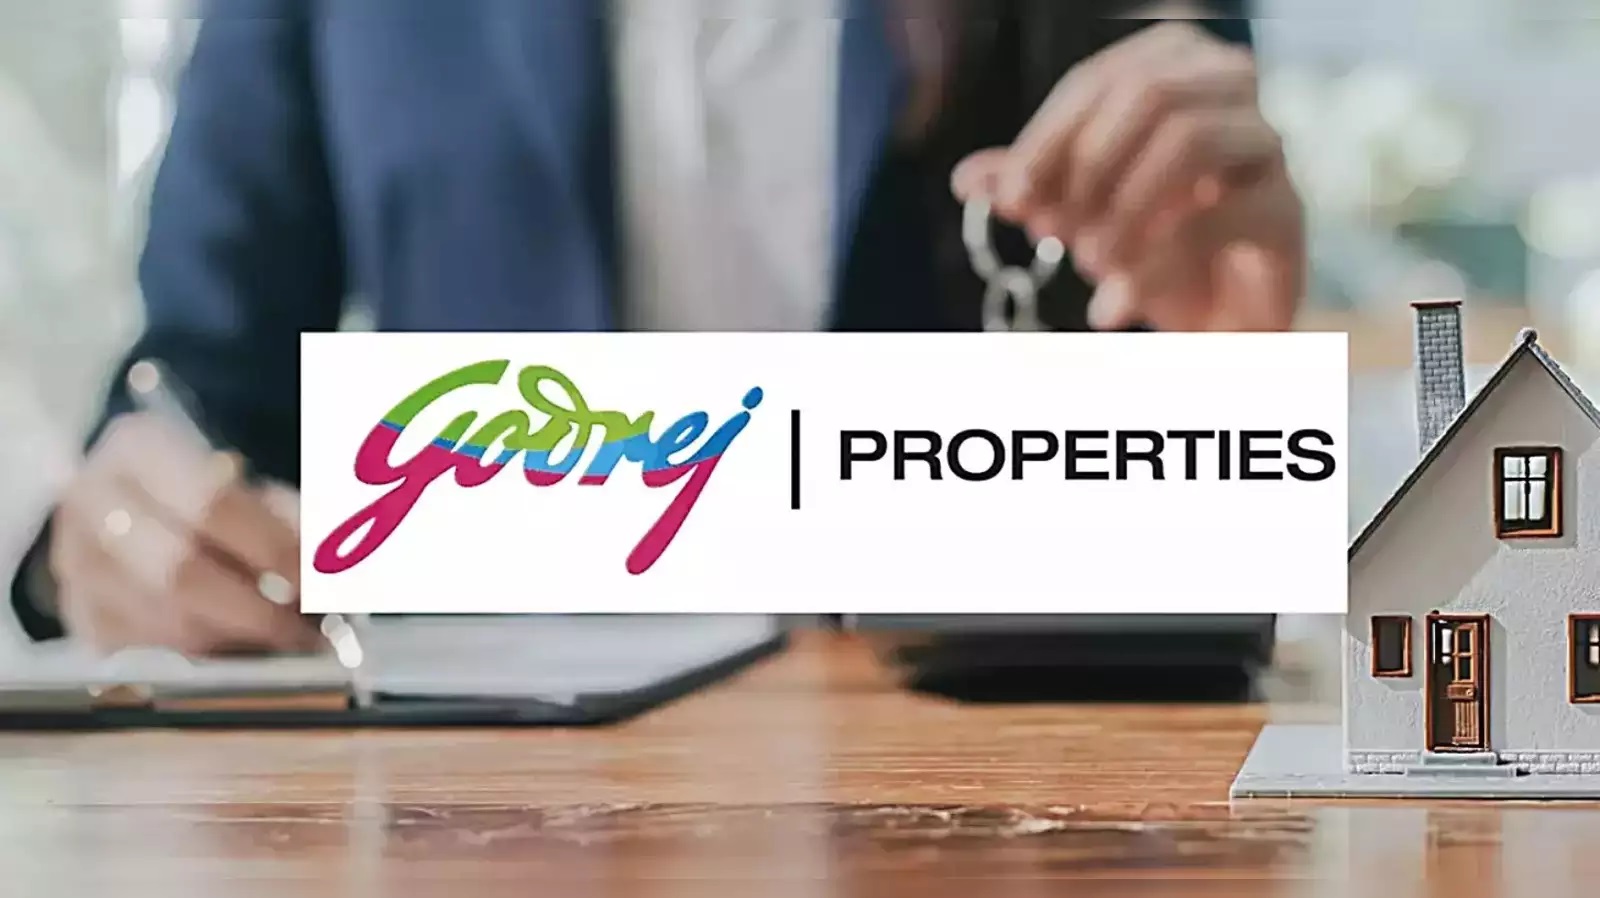 Godrej Properties sells Rs 2,600 crore worth apartments in Gurugram project